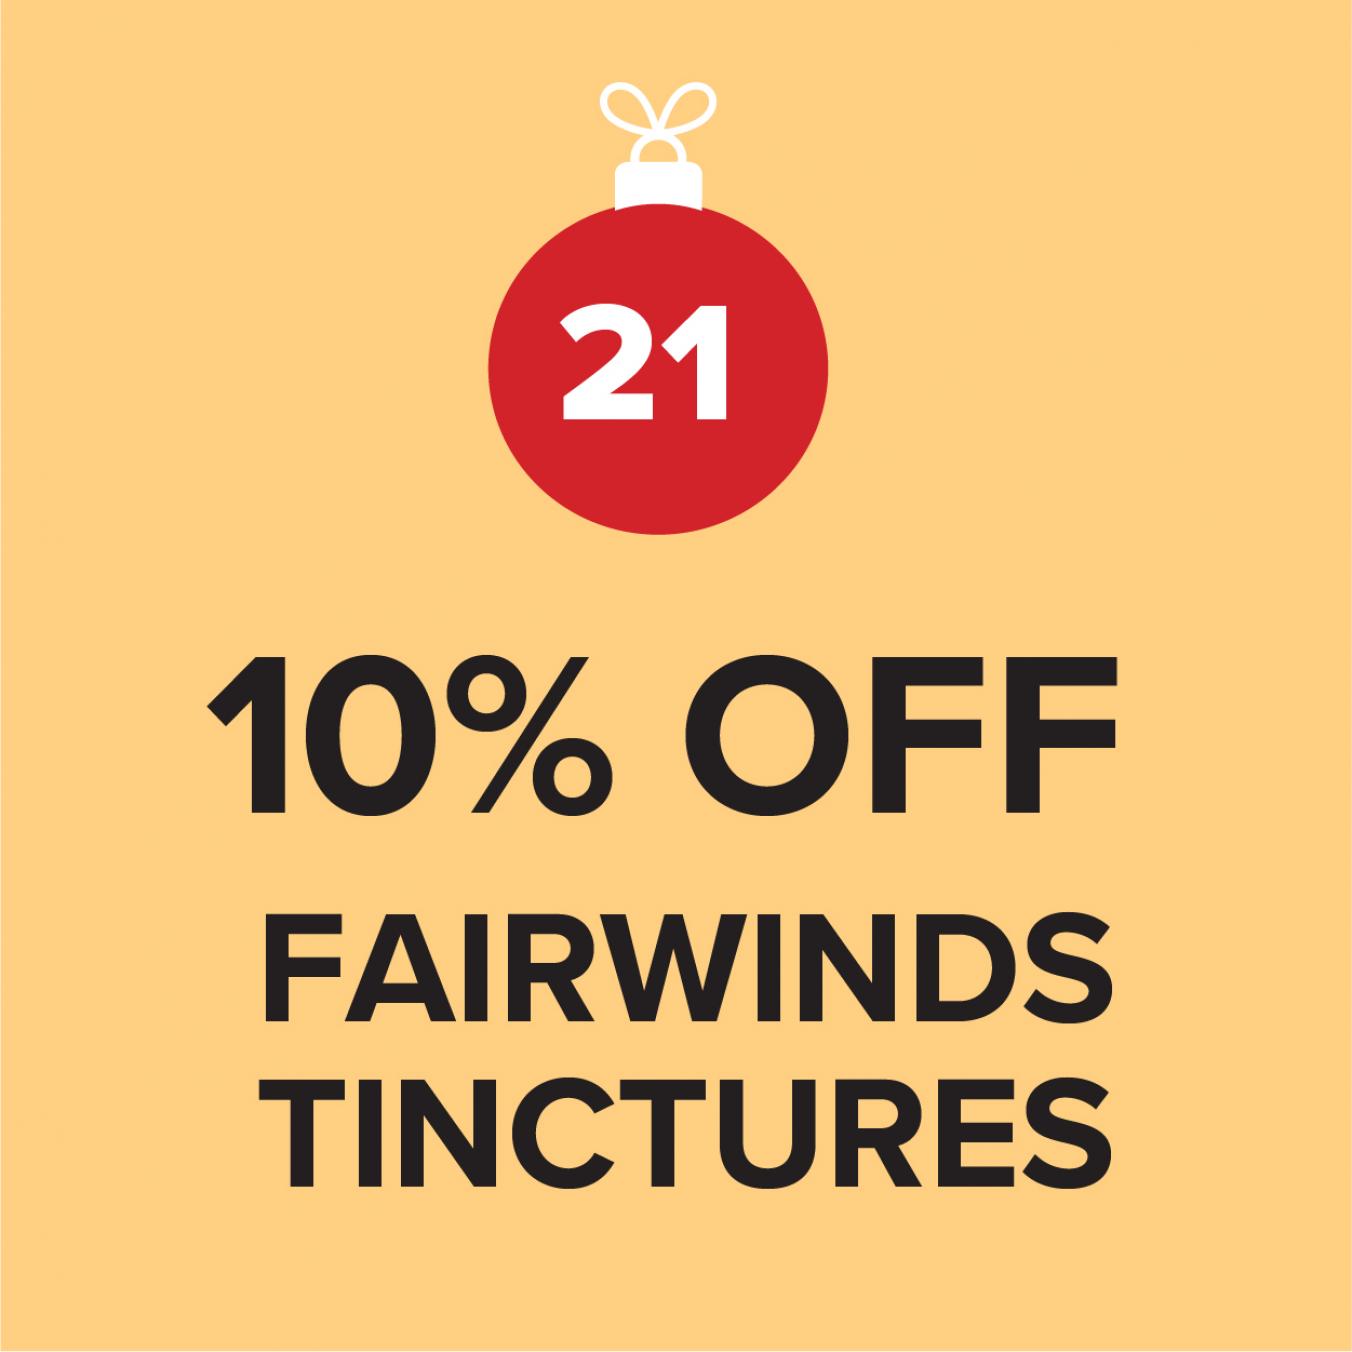 10% Off Fairwinds Tinctures